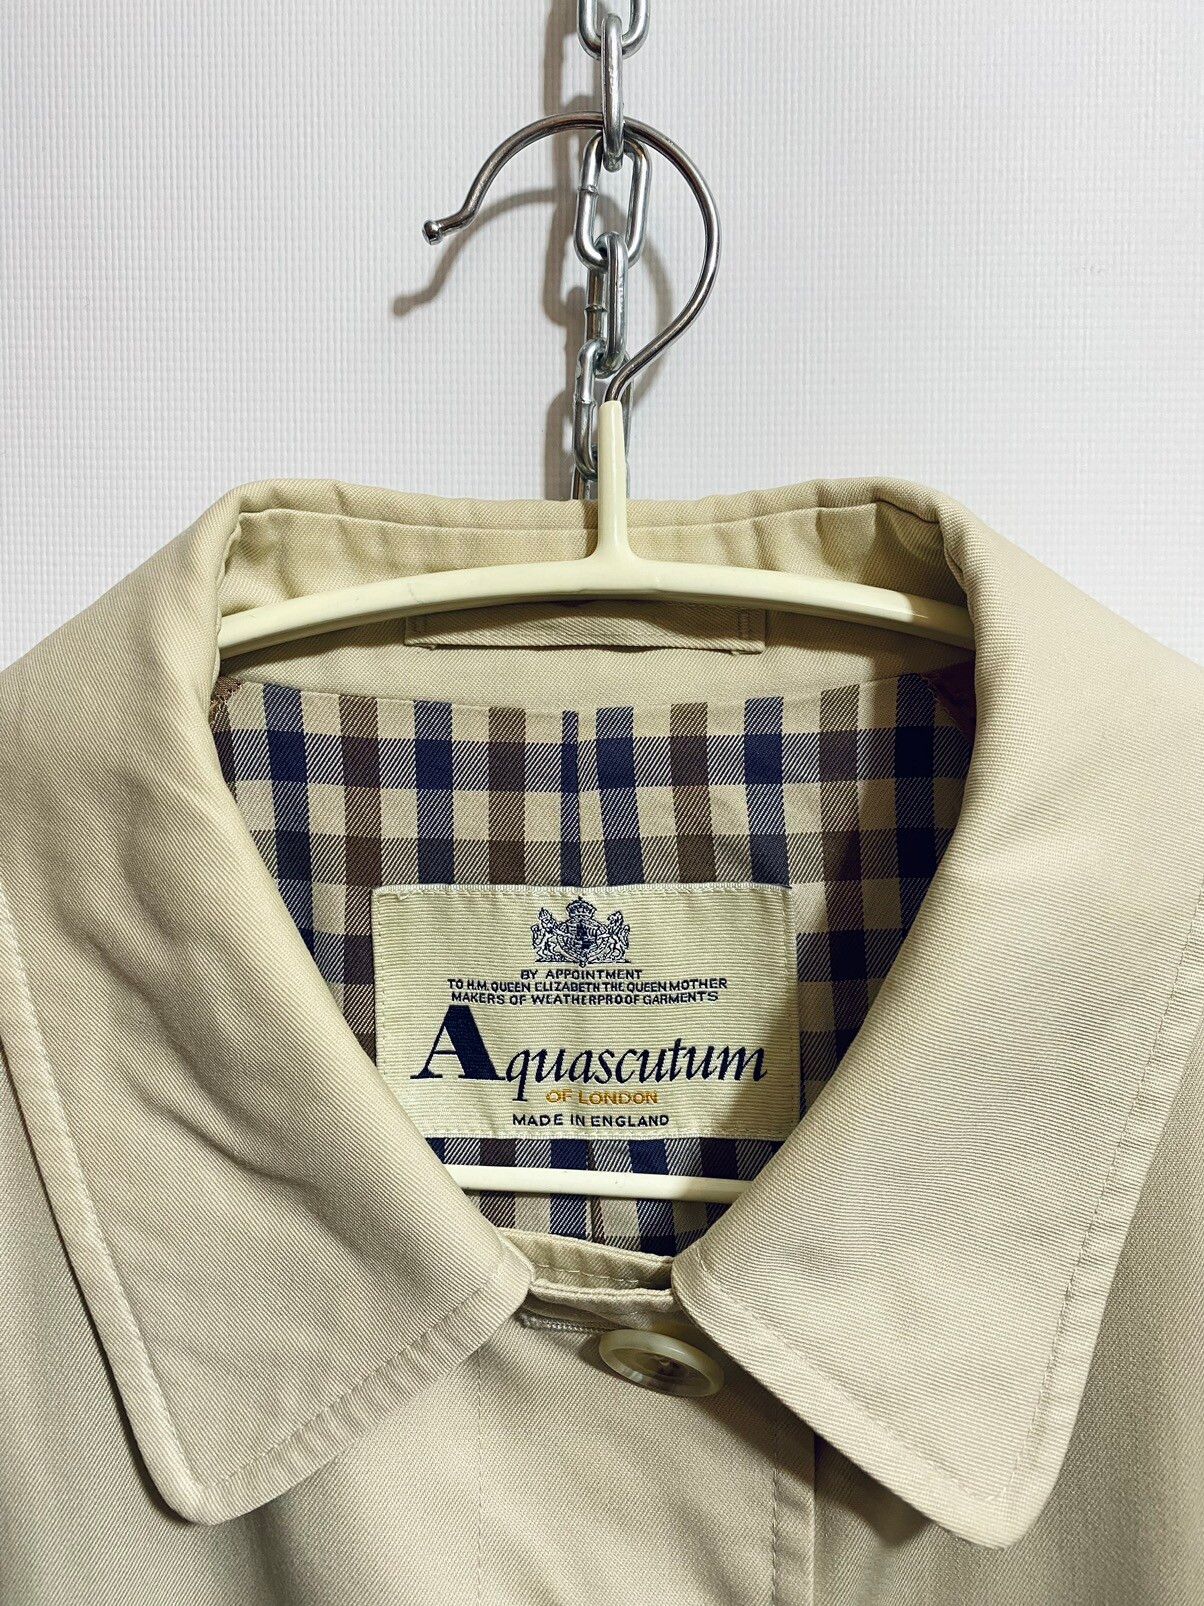 Vintage Aquascutum Vintage Trench Coat England Classic Size US M / EU 48-50 / 2 - 7 Thumbnail